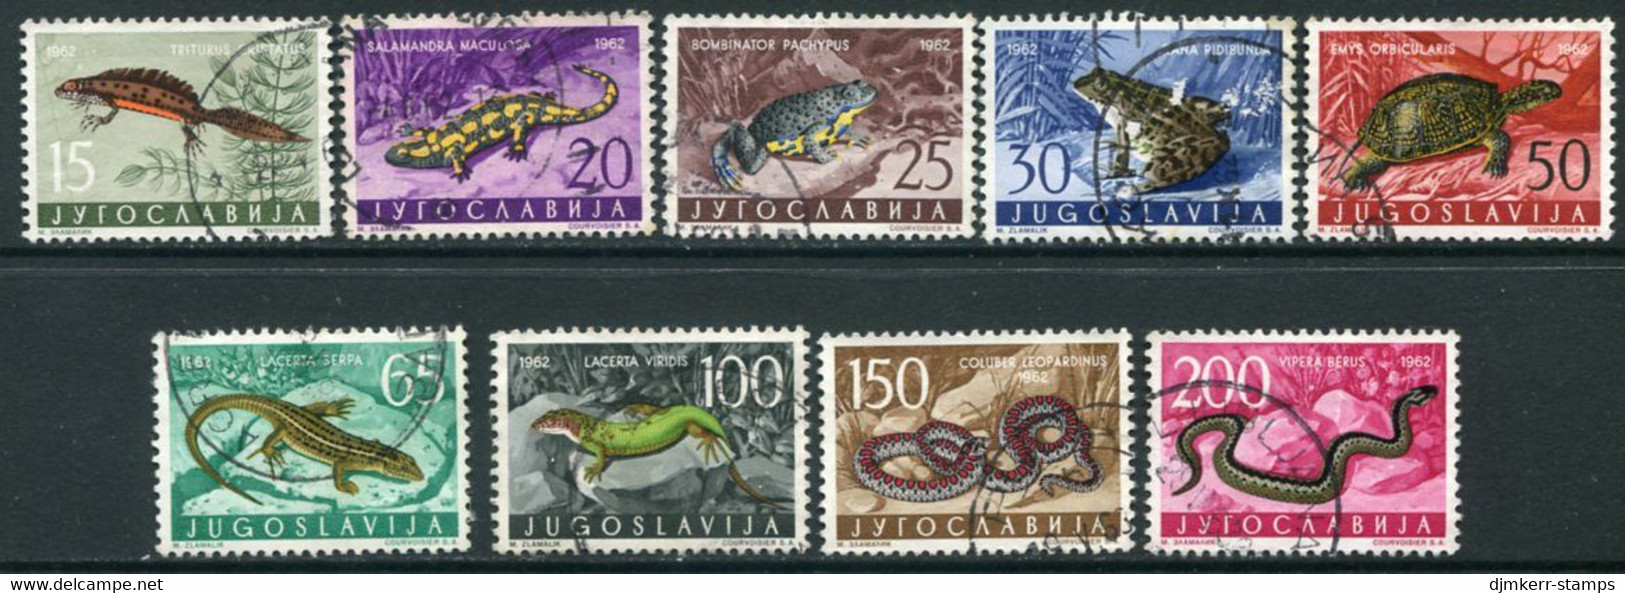 YUGOSLAVIA 1962 Amphibians And Reptiles  Used.  Michel 1007-15 - Gebraucht